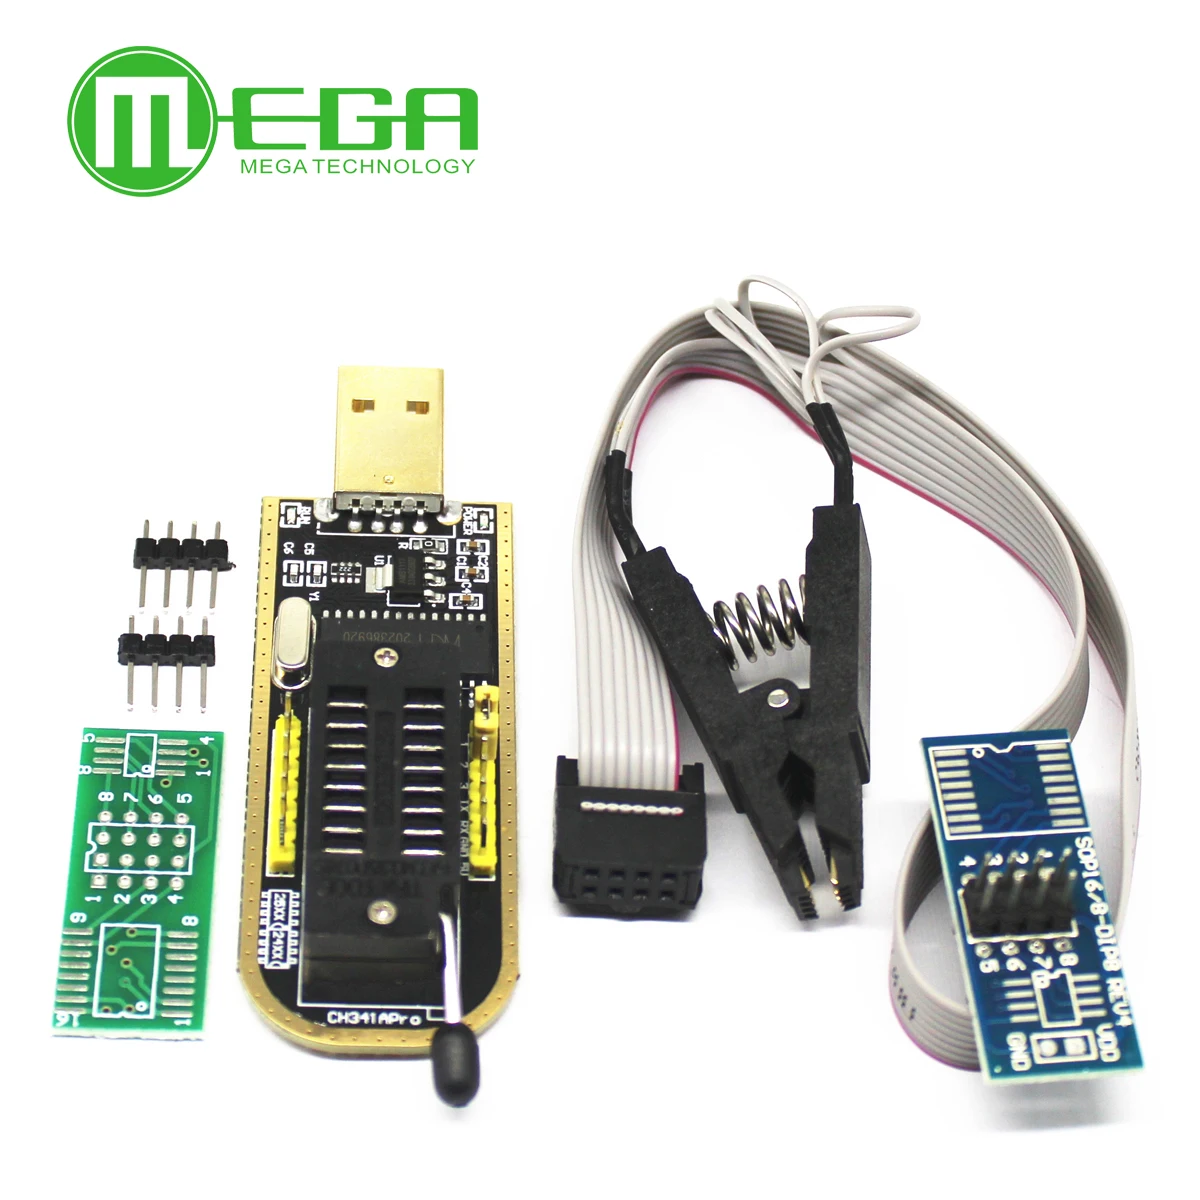 Festnight Programador USB CH341A EEPROM BIOS Flasher Circuitos lógicos programables adecuados para chips de la serie 24/25 